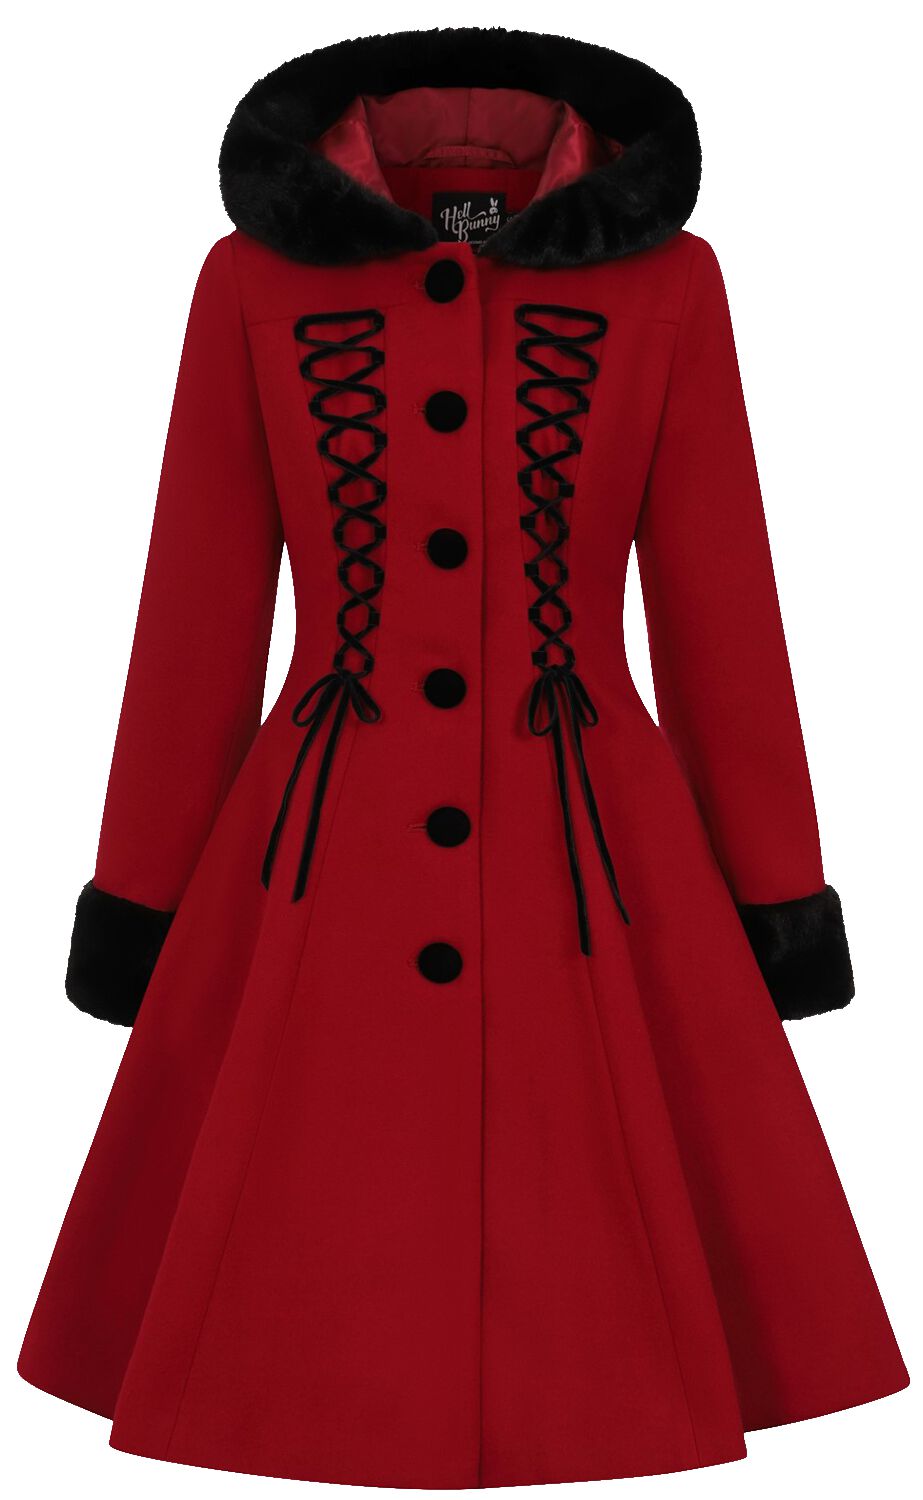 Hell Bunny Amaya Coat Mantel rot schwarz in 4XL